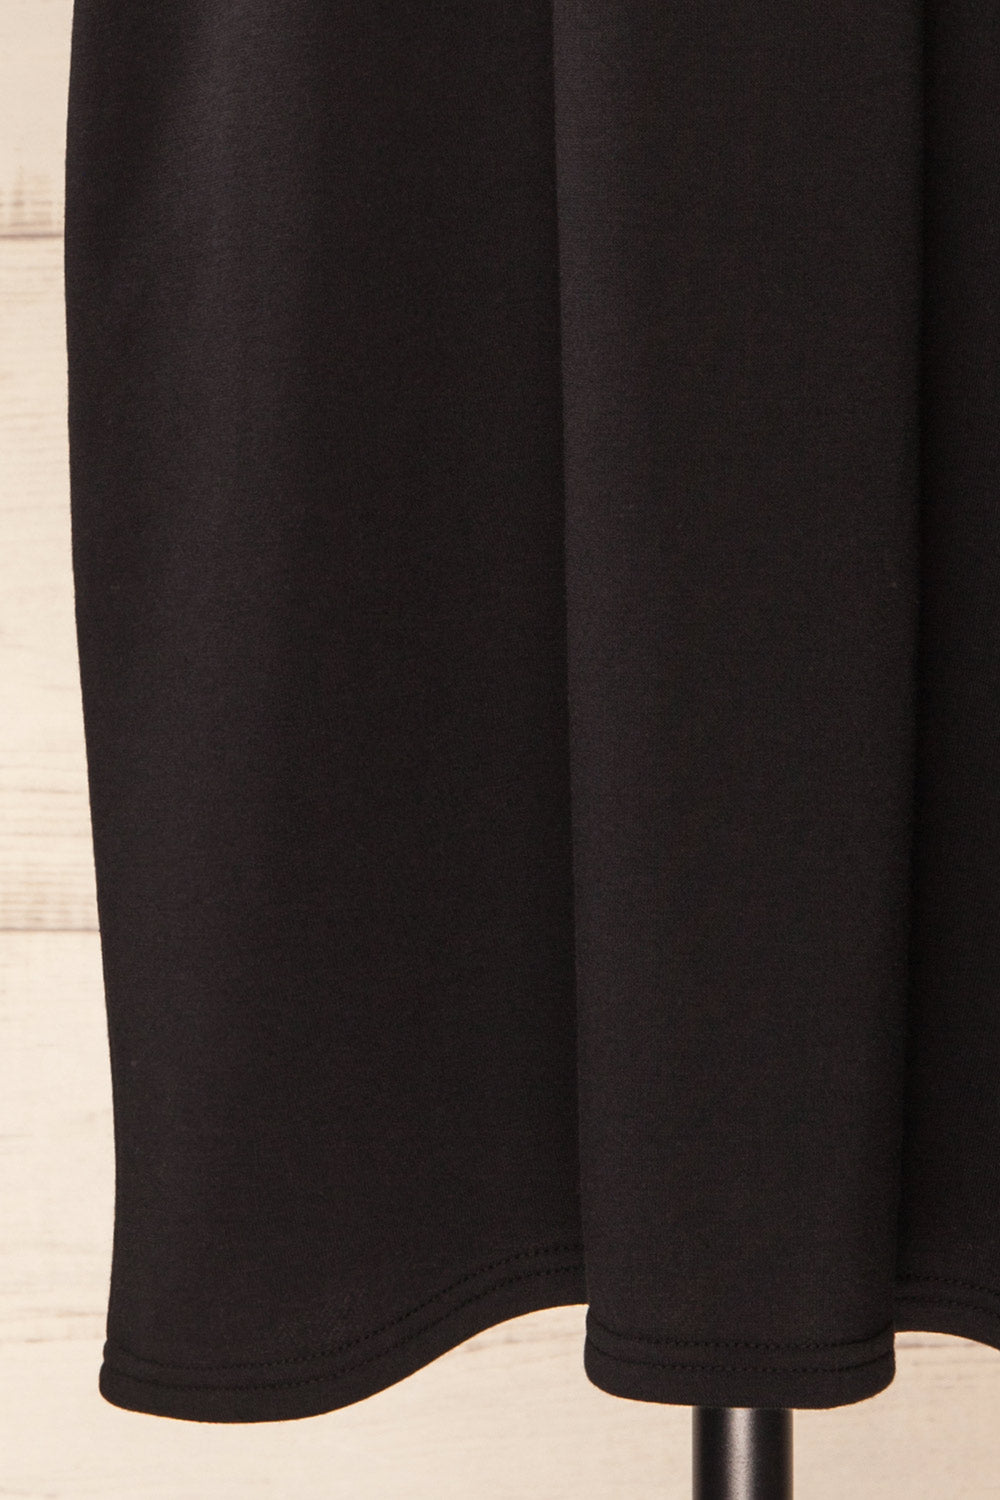 Jerzey Black T-Shirt Dress w/ Pockets | La petite garçonne bottom